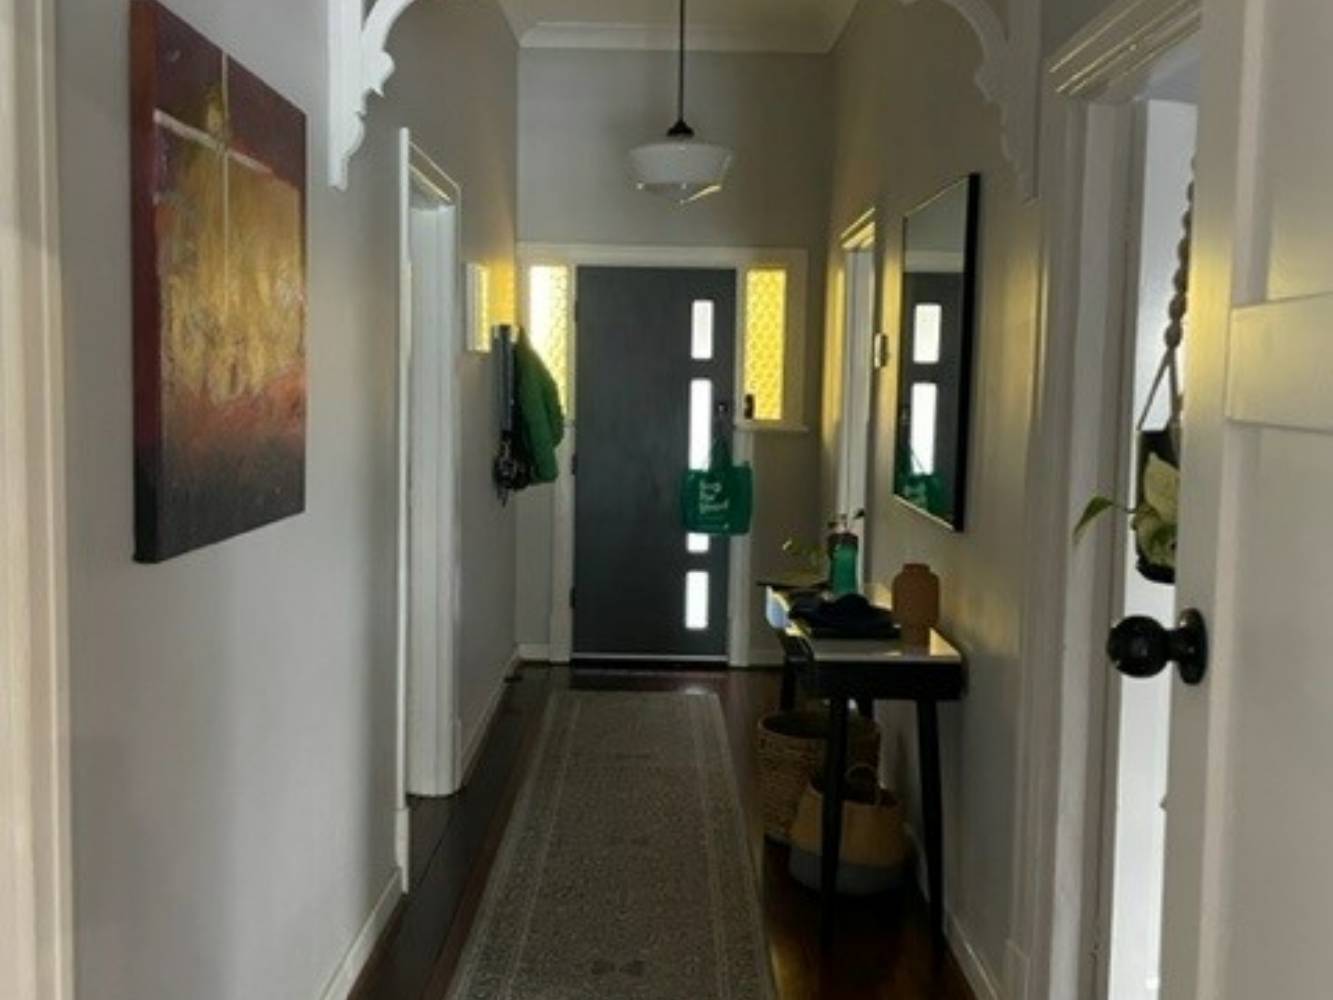 Entry hallway